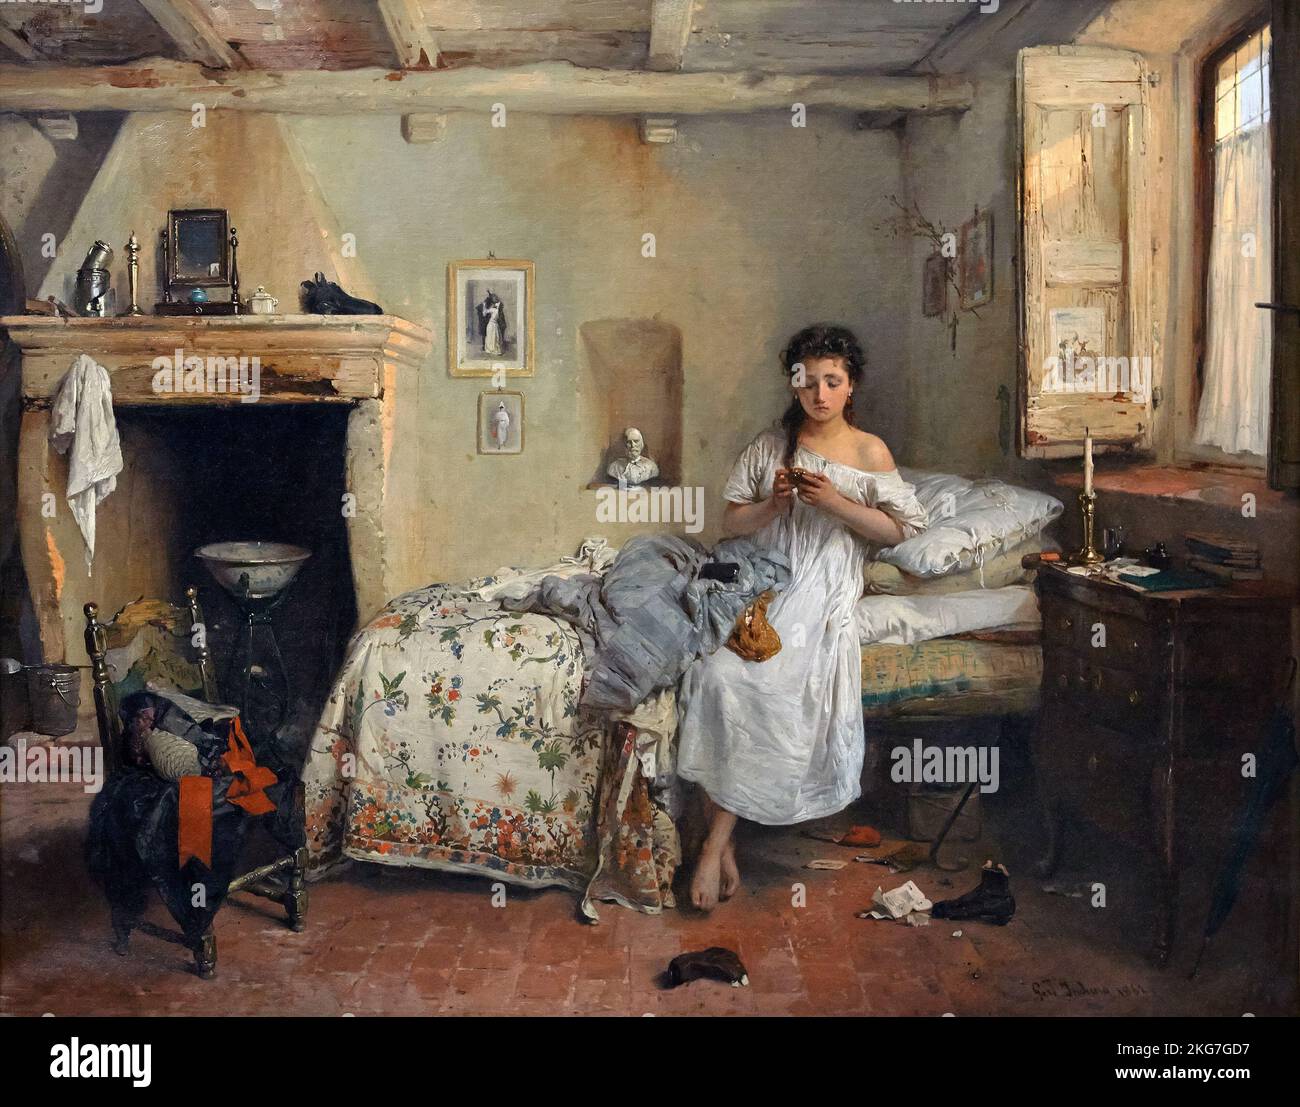 Triste presentimento   - olio su tela  - Girolamo Induno  - 1862 - Milano, Pinacoteca di Brera Stock Photo